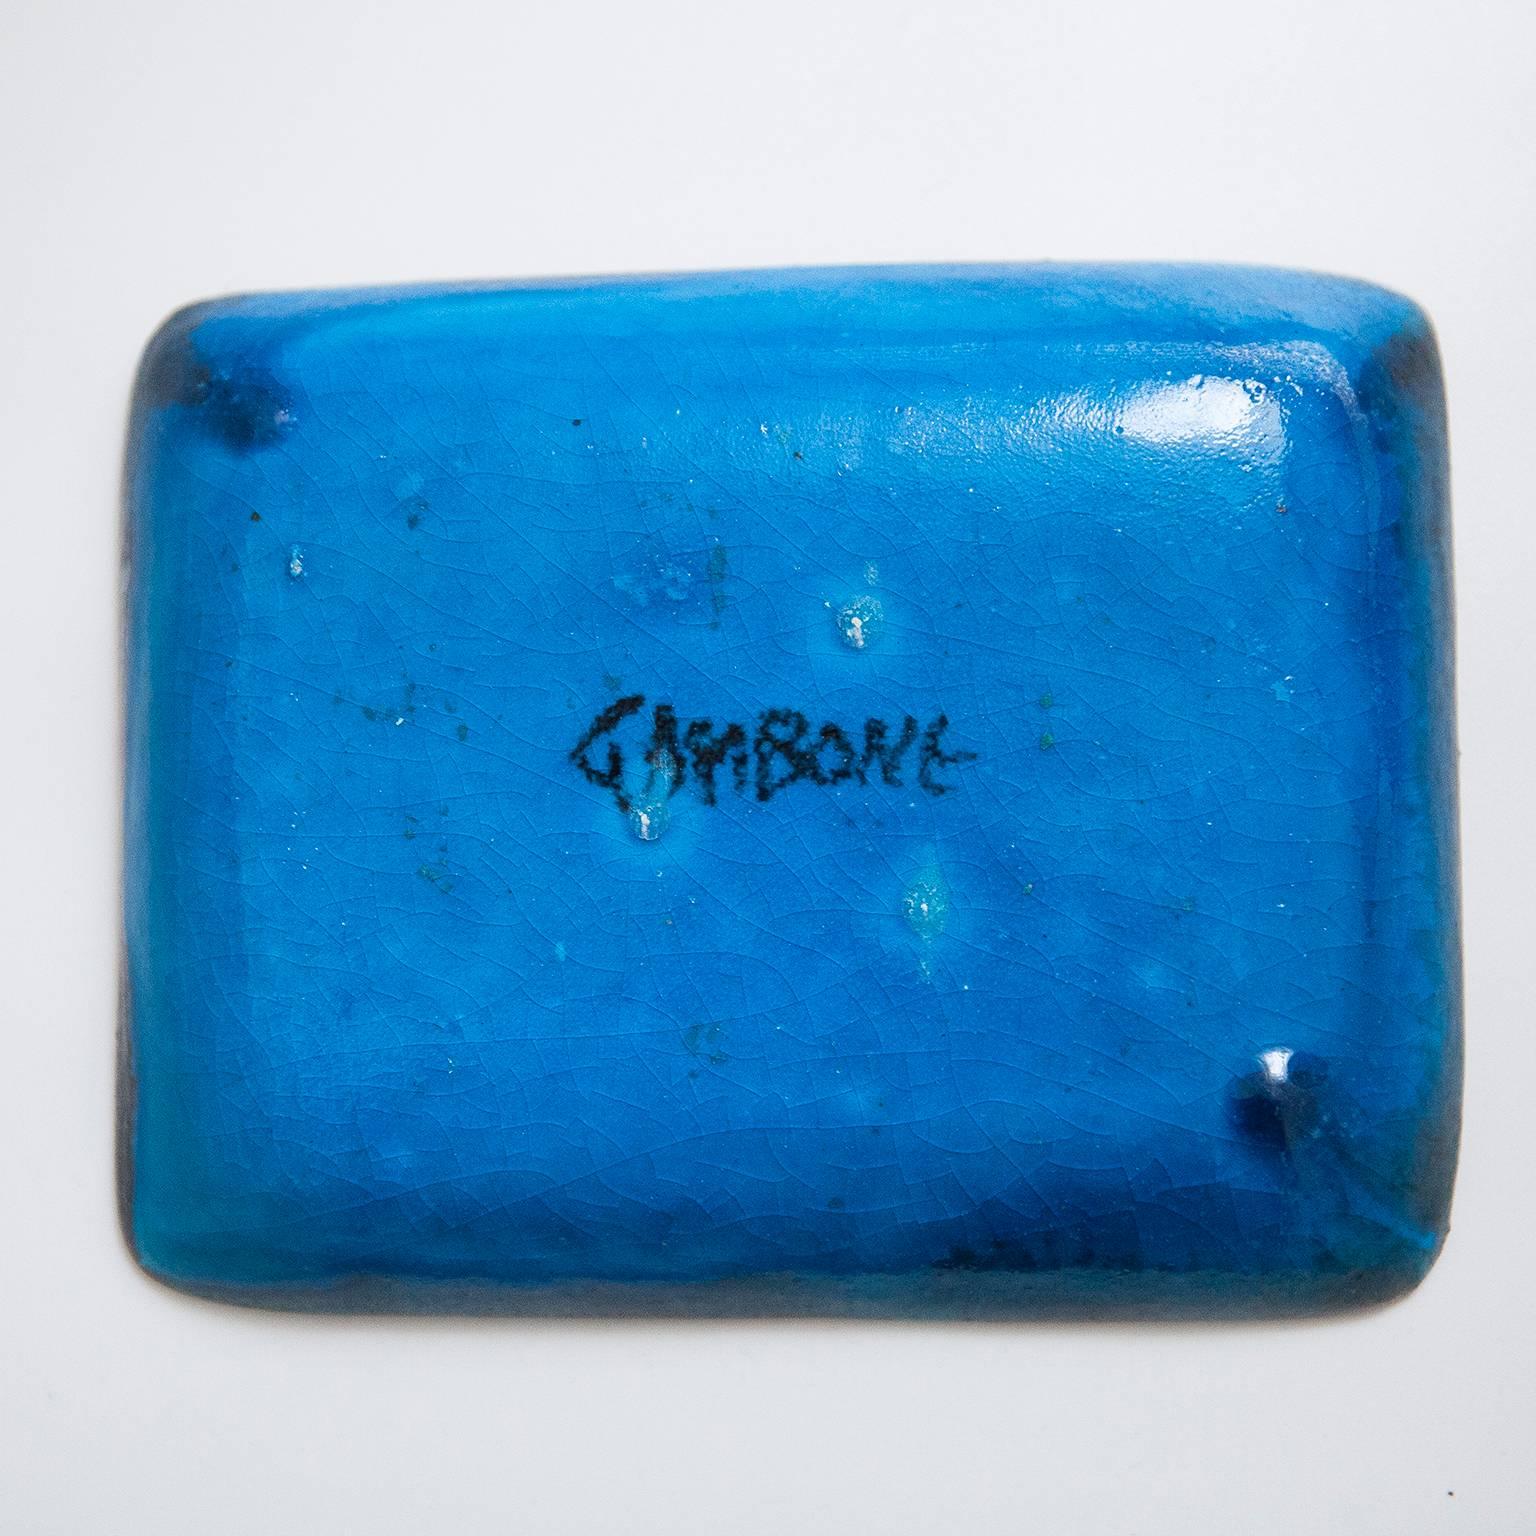 Bruno Gambone ceramic dish with fantastic blue glazed color. 

Measures: H 3 W 20,5 D 16 cm.